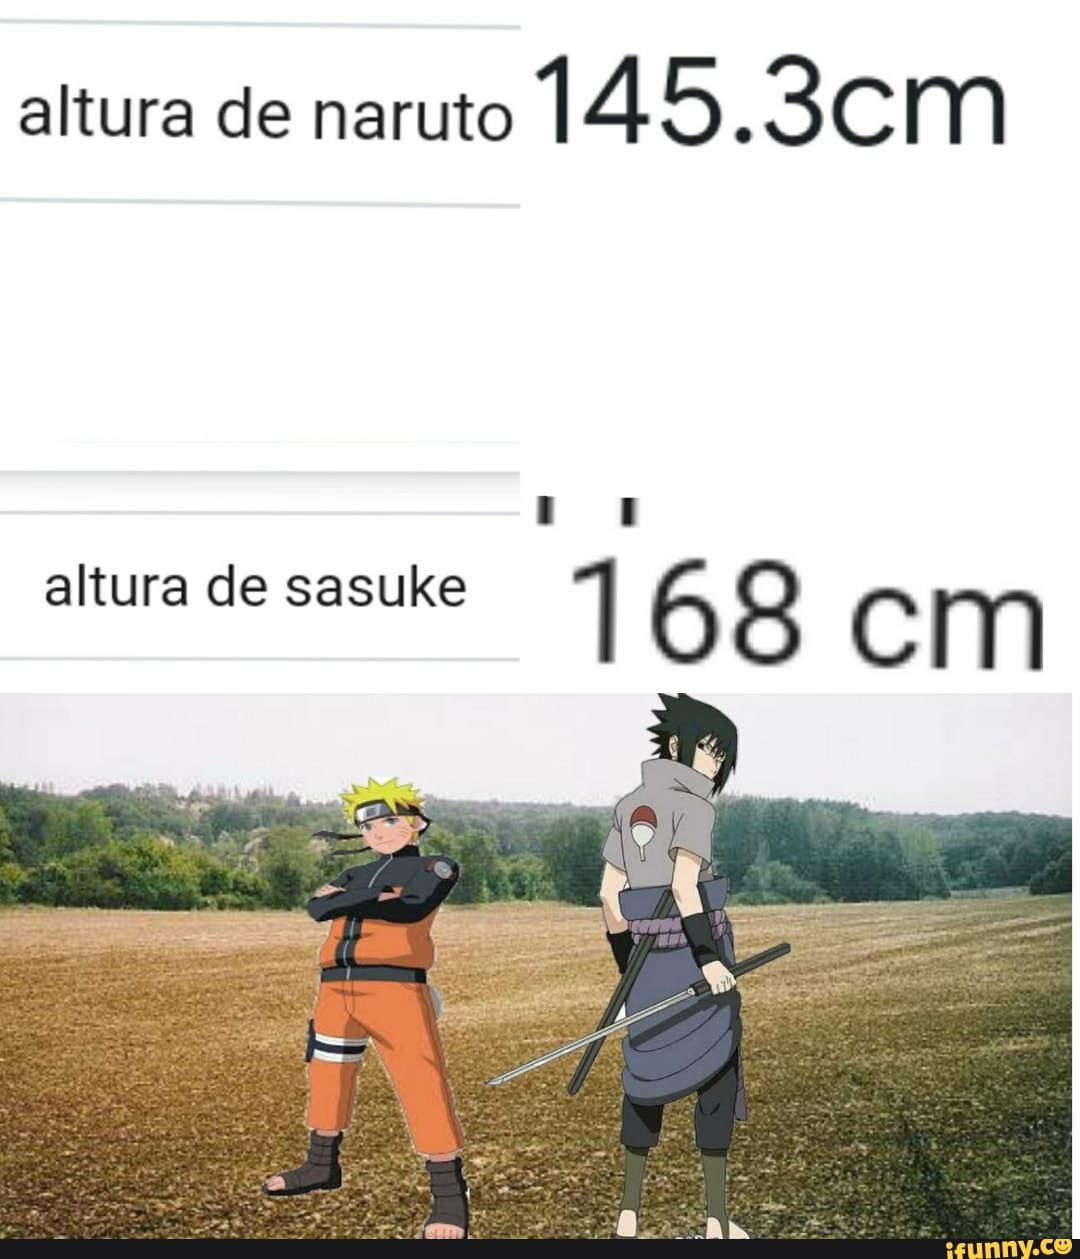 Altura de naruto altura de sasuke 168 cm - iFunny Brazil